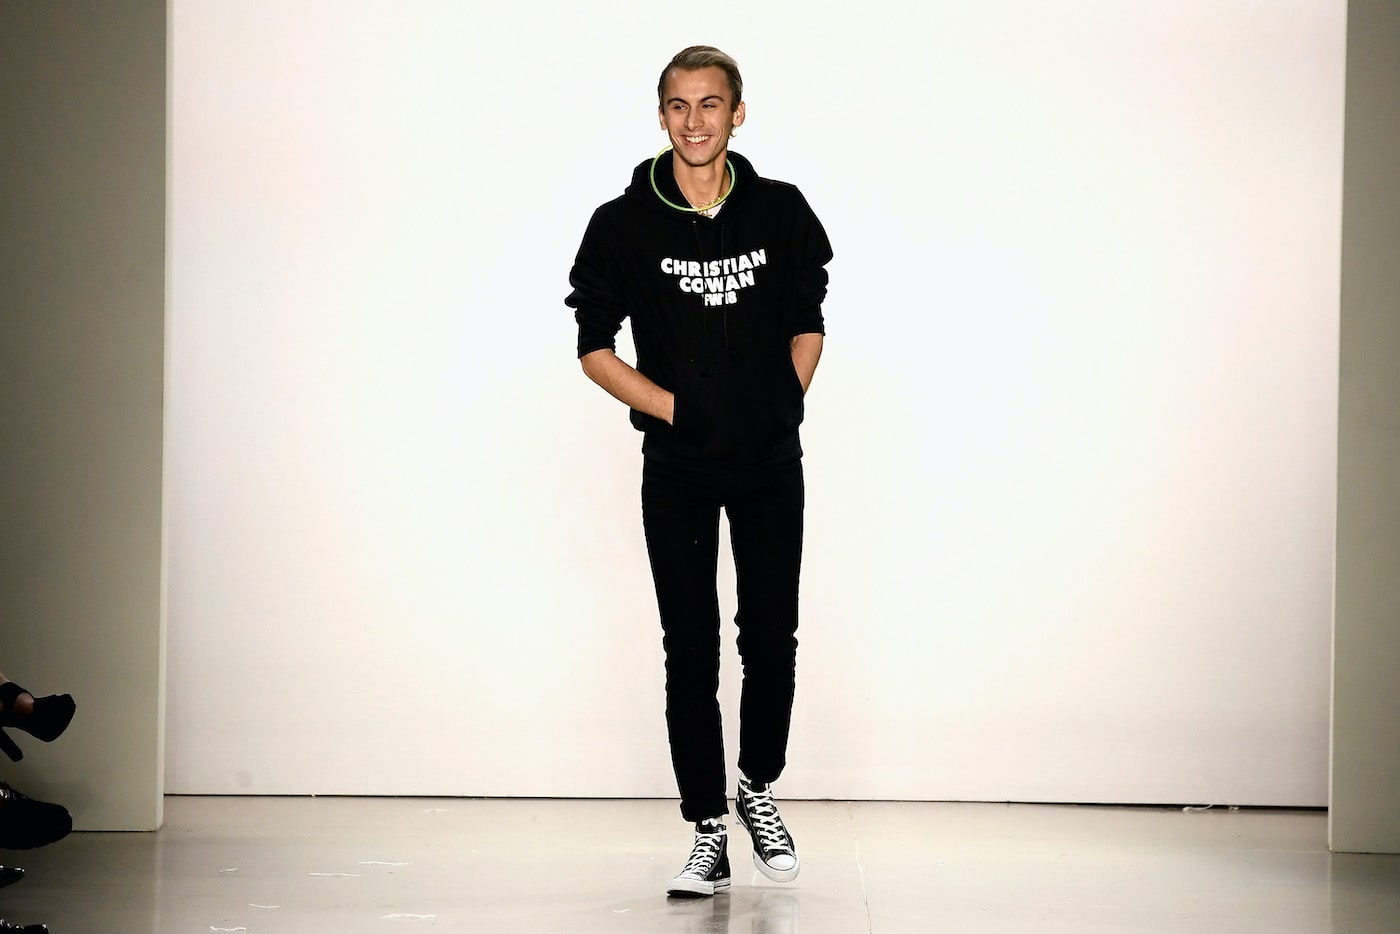 Christian Cowan walks the runway for Christian Cowan during 2018 New York Fashion Week